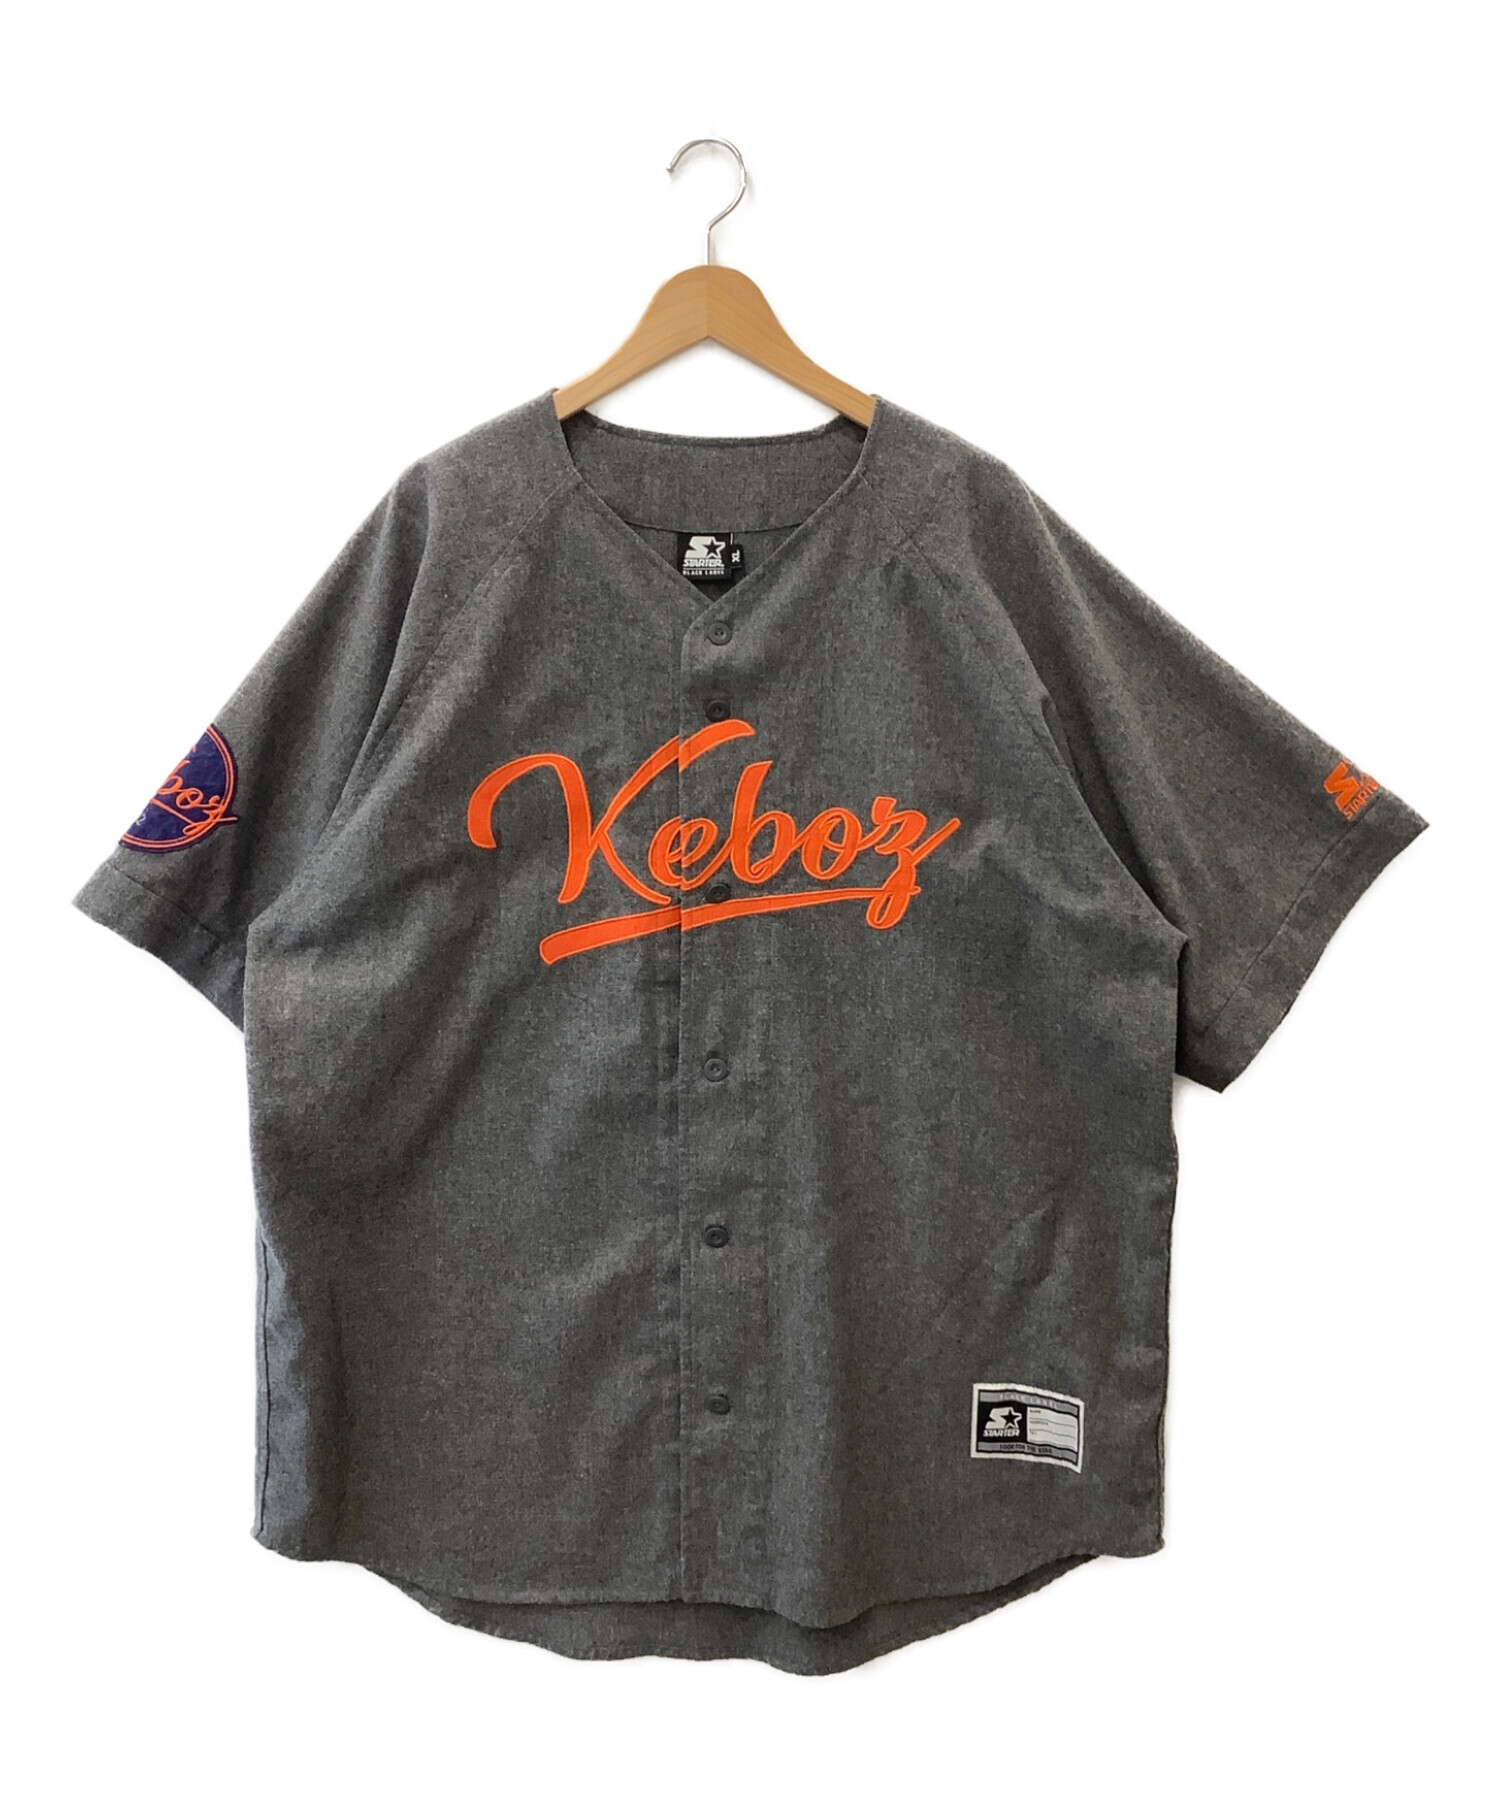 keboz ケボズ 初期 ベースボールシャツ サイズ L starter コラボ